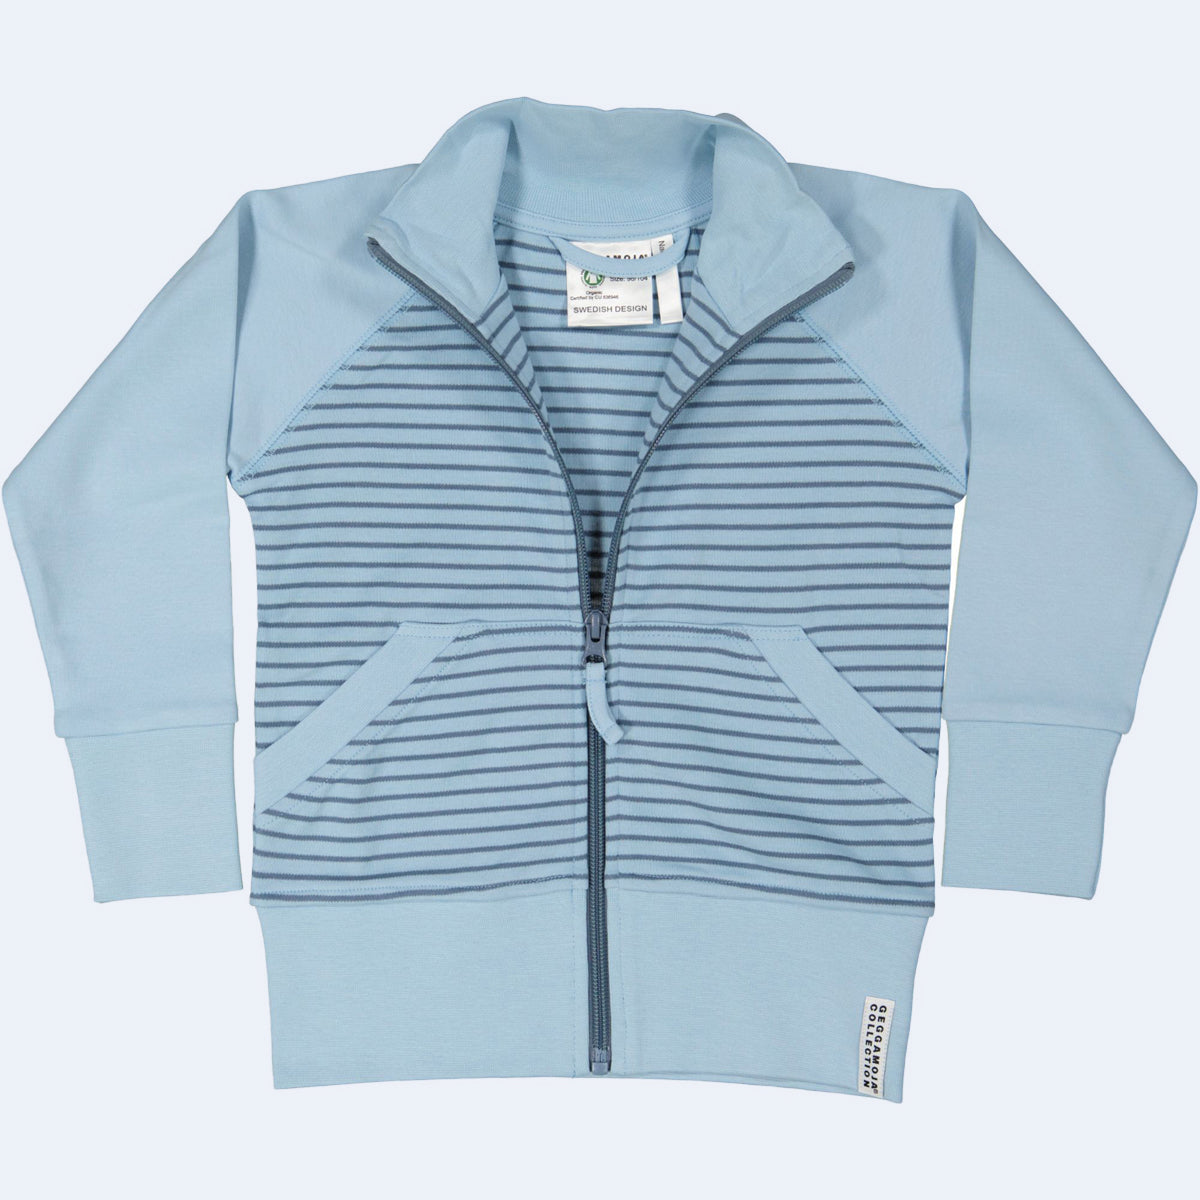 Geggamoja®  "Zipsweater" in Organic Cotton - LIGHT BLUE STRIPE, sizes up to 8 yr.